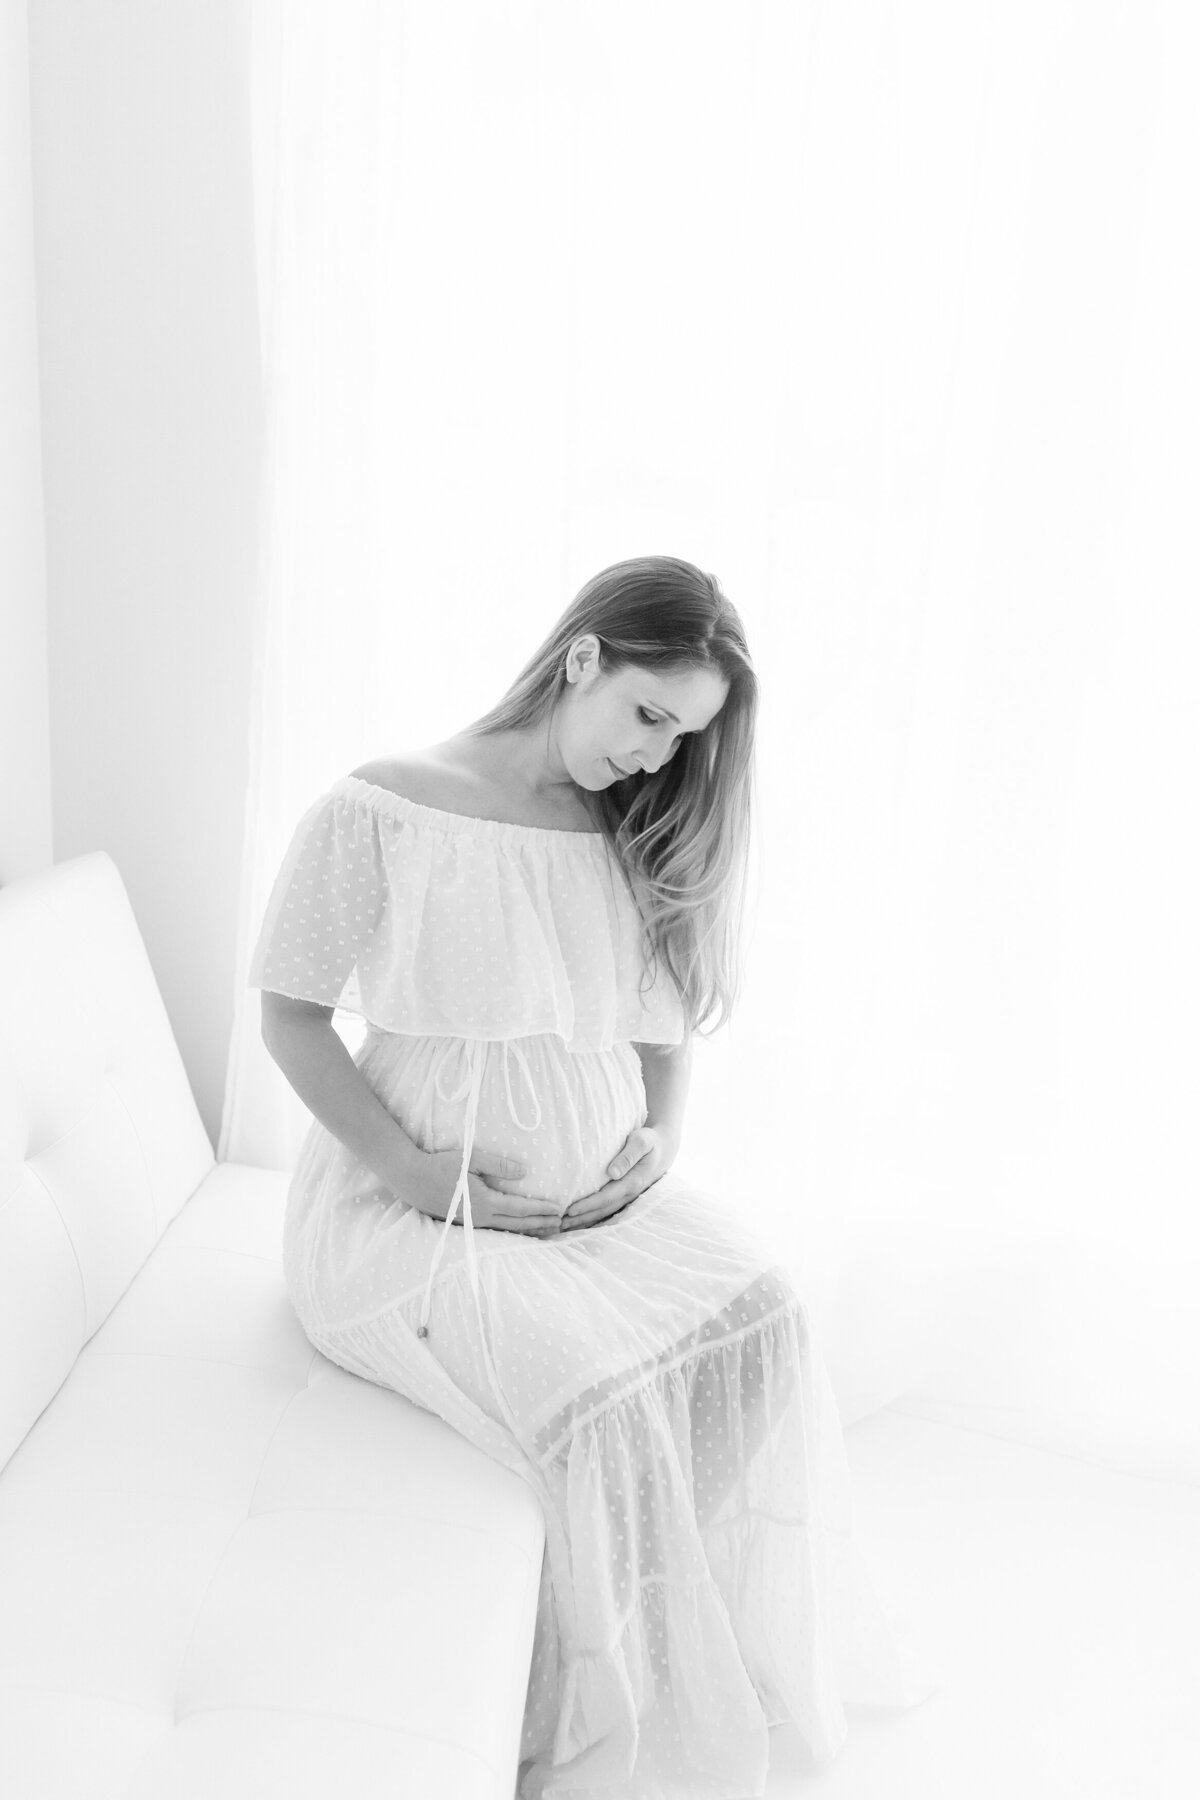 jacksonville-maternity-photographer-29